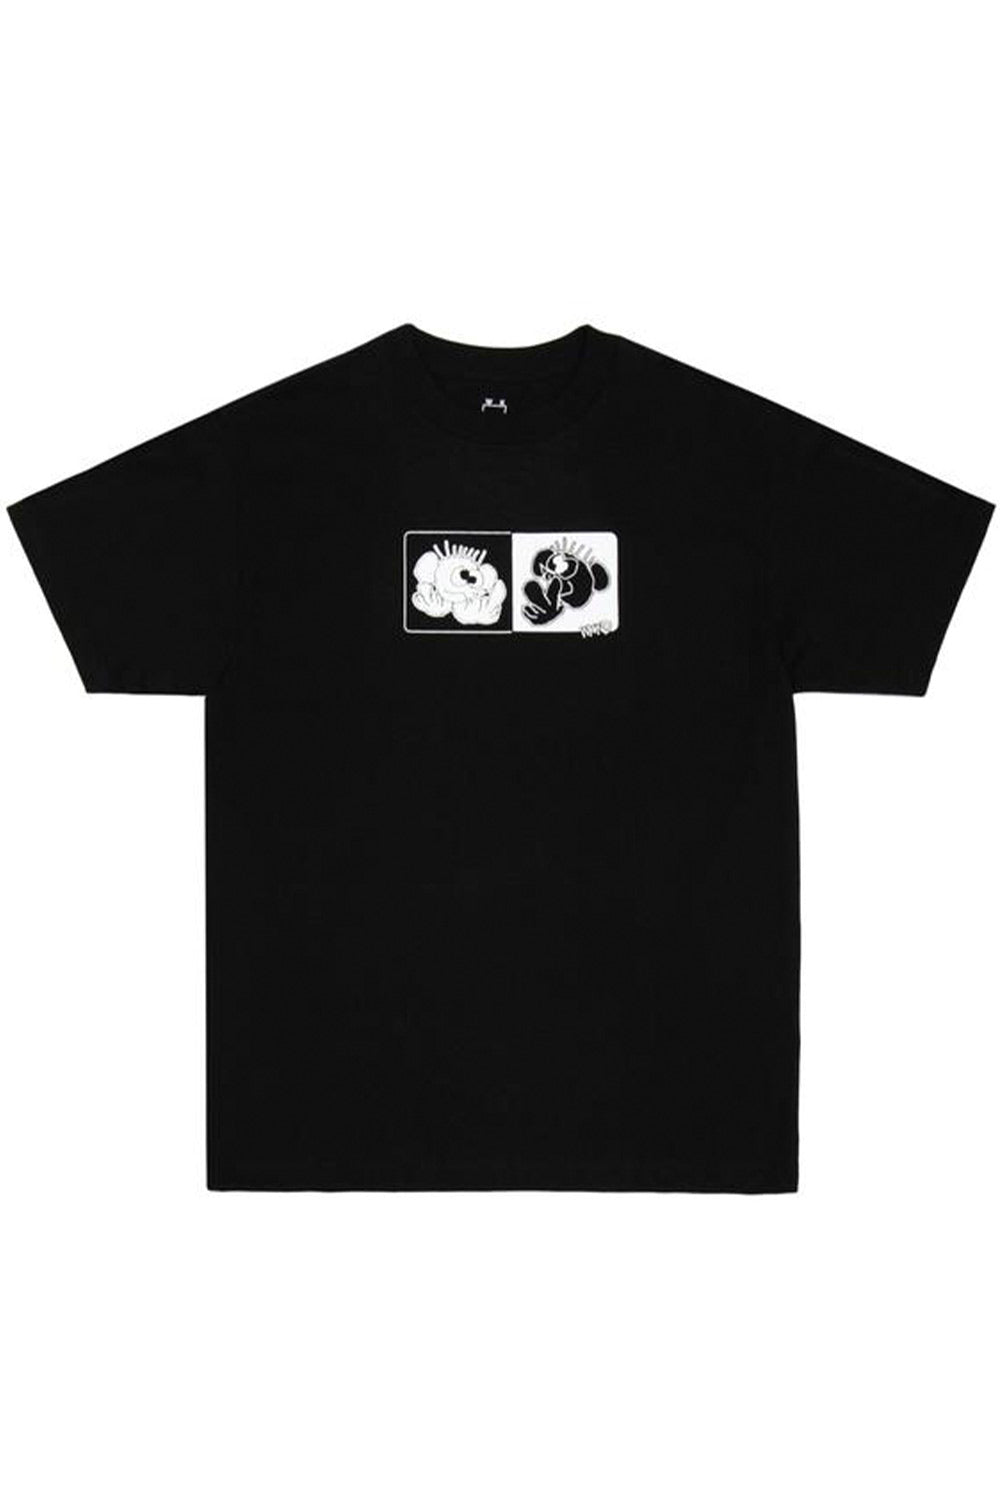 Shop WKND | WKND Deaky T-Shirt - Black